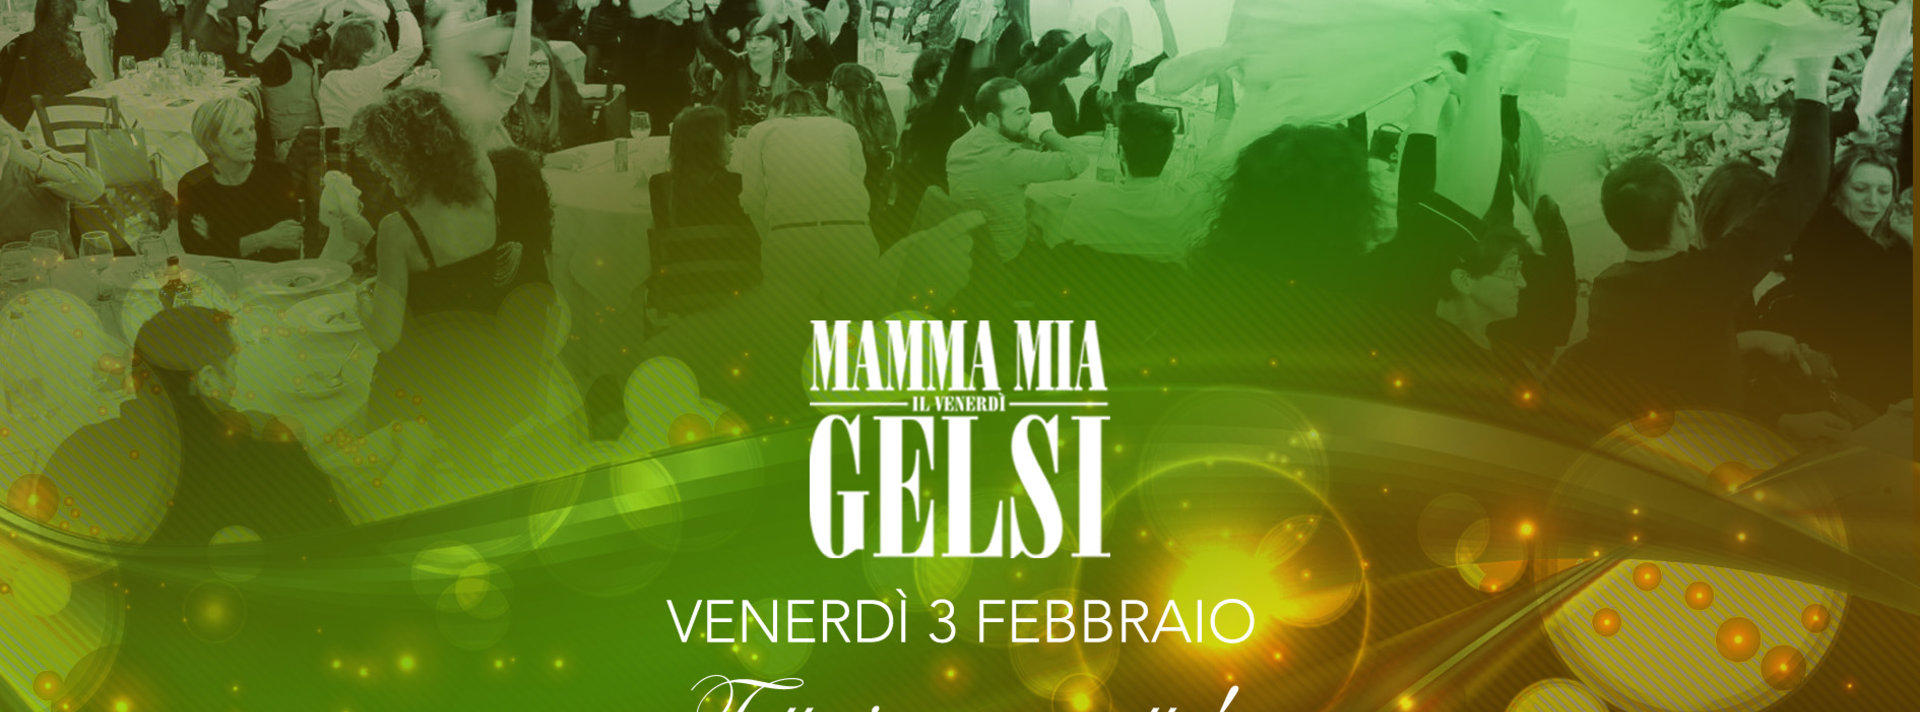 Venerdì Mammamia alla Casa dei Gelsi - 3 febbraio 